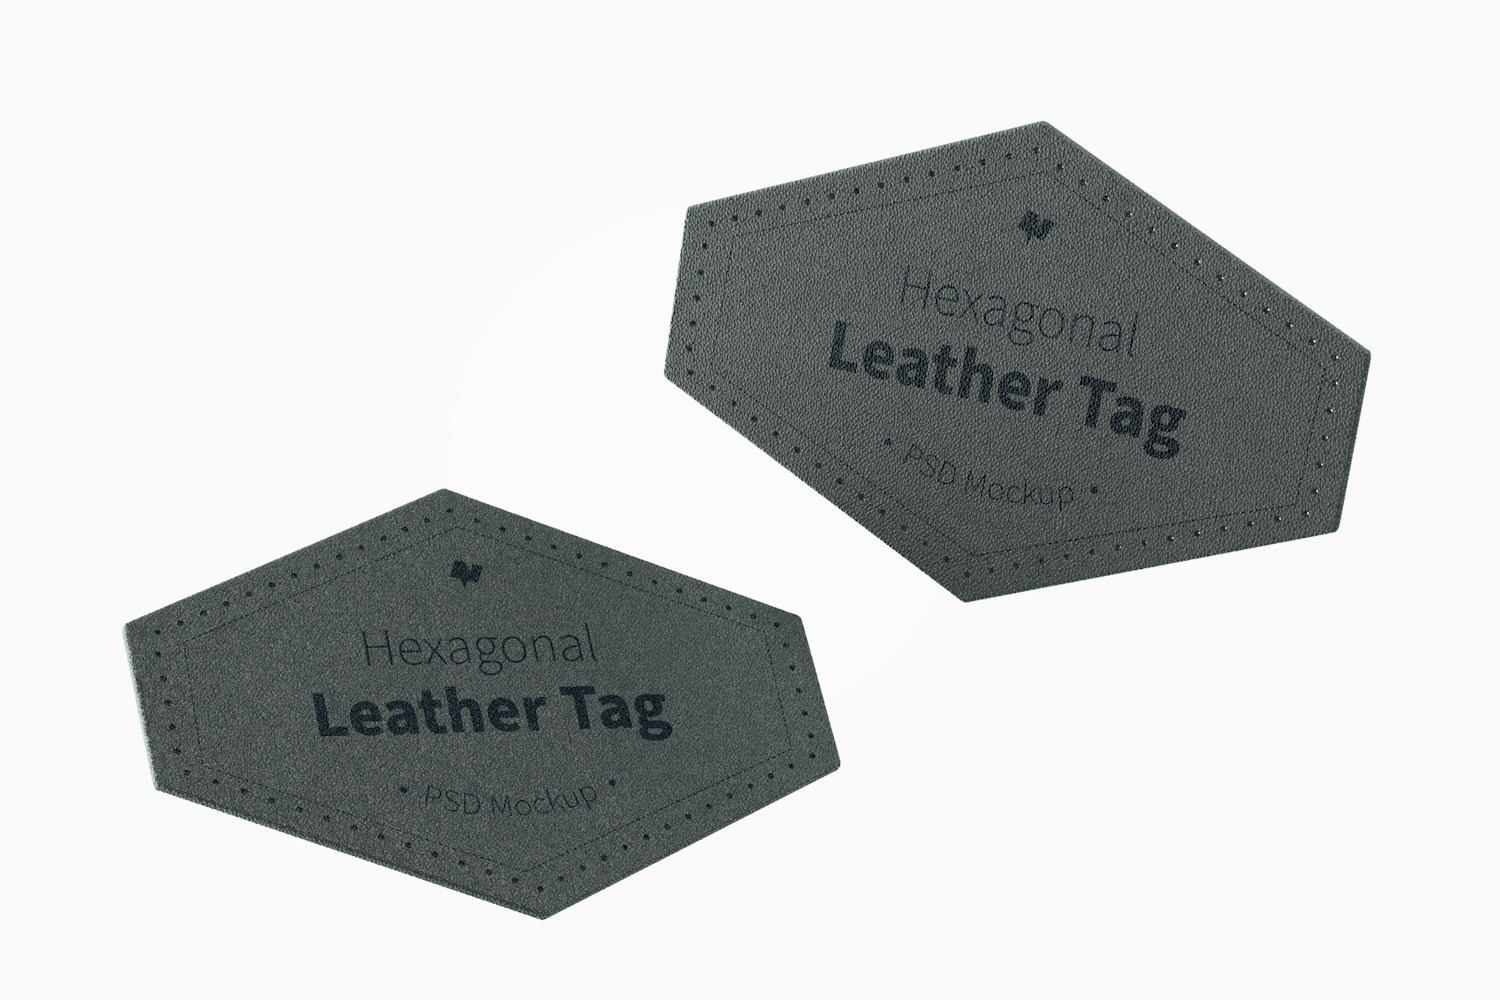 Hexagonal Leather Tags Mockup